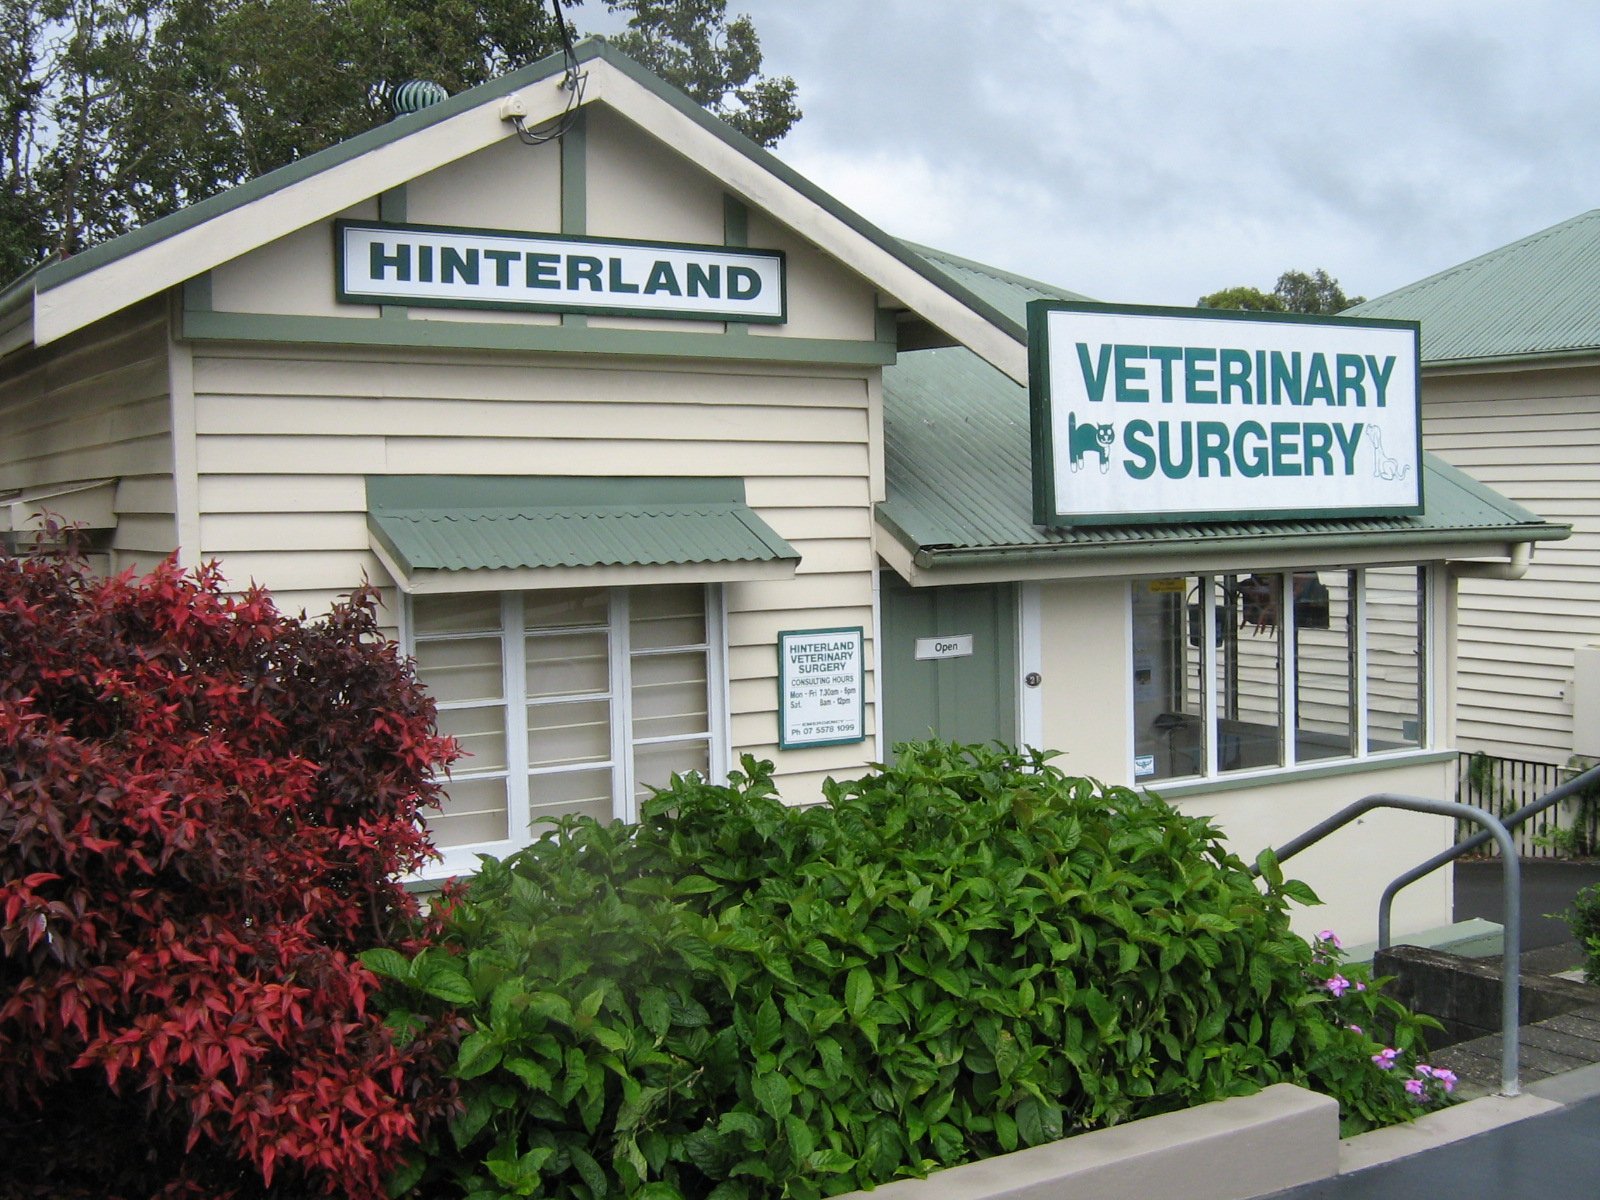 Hinterland Veterinary Surgery - Vet Australia 0